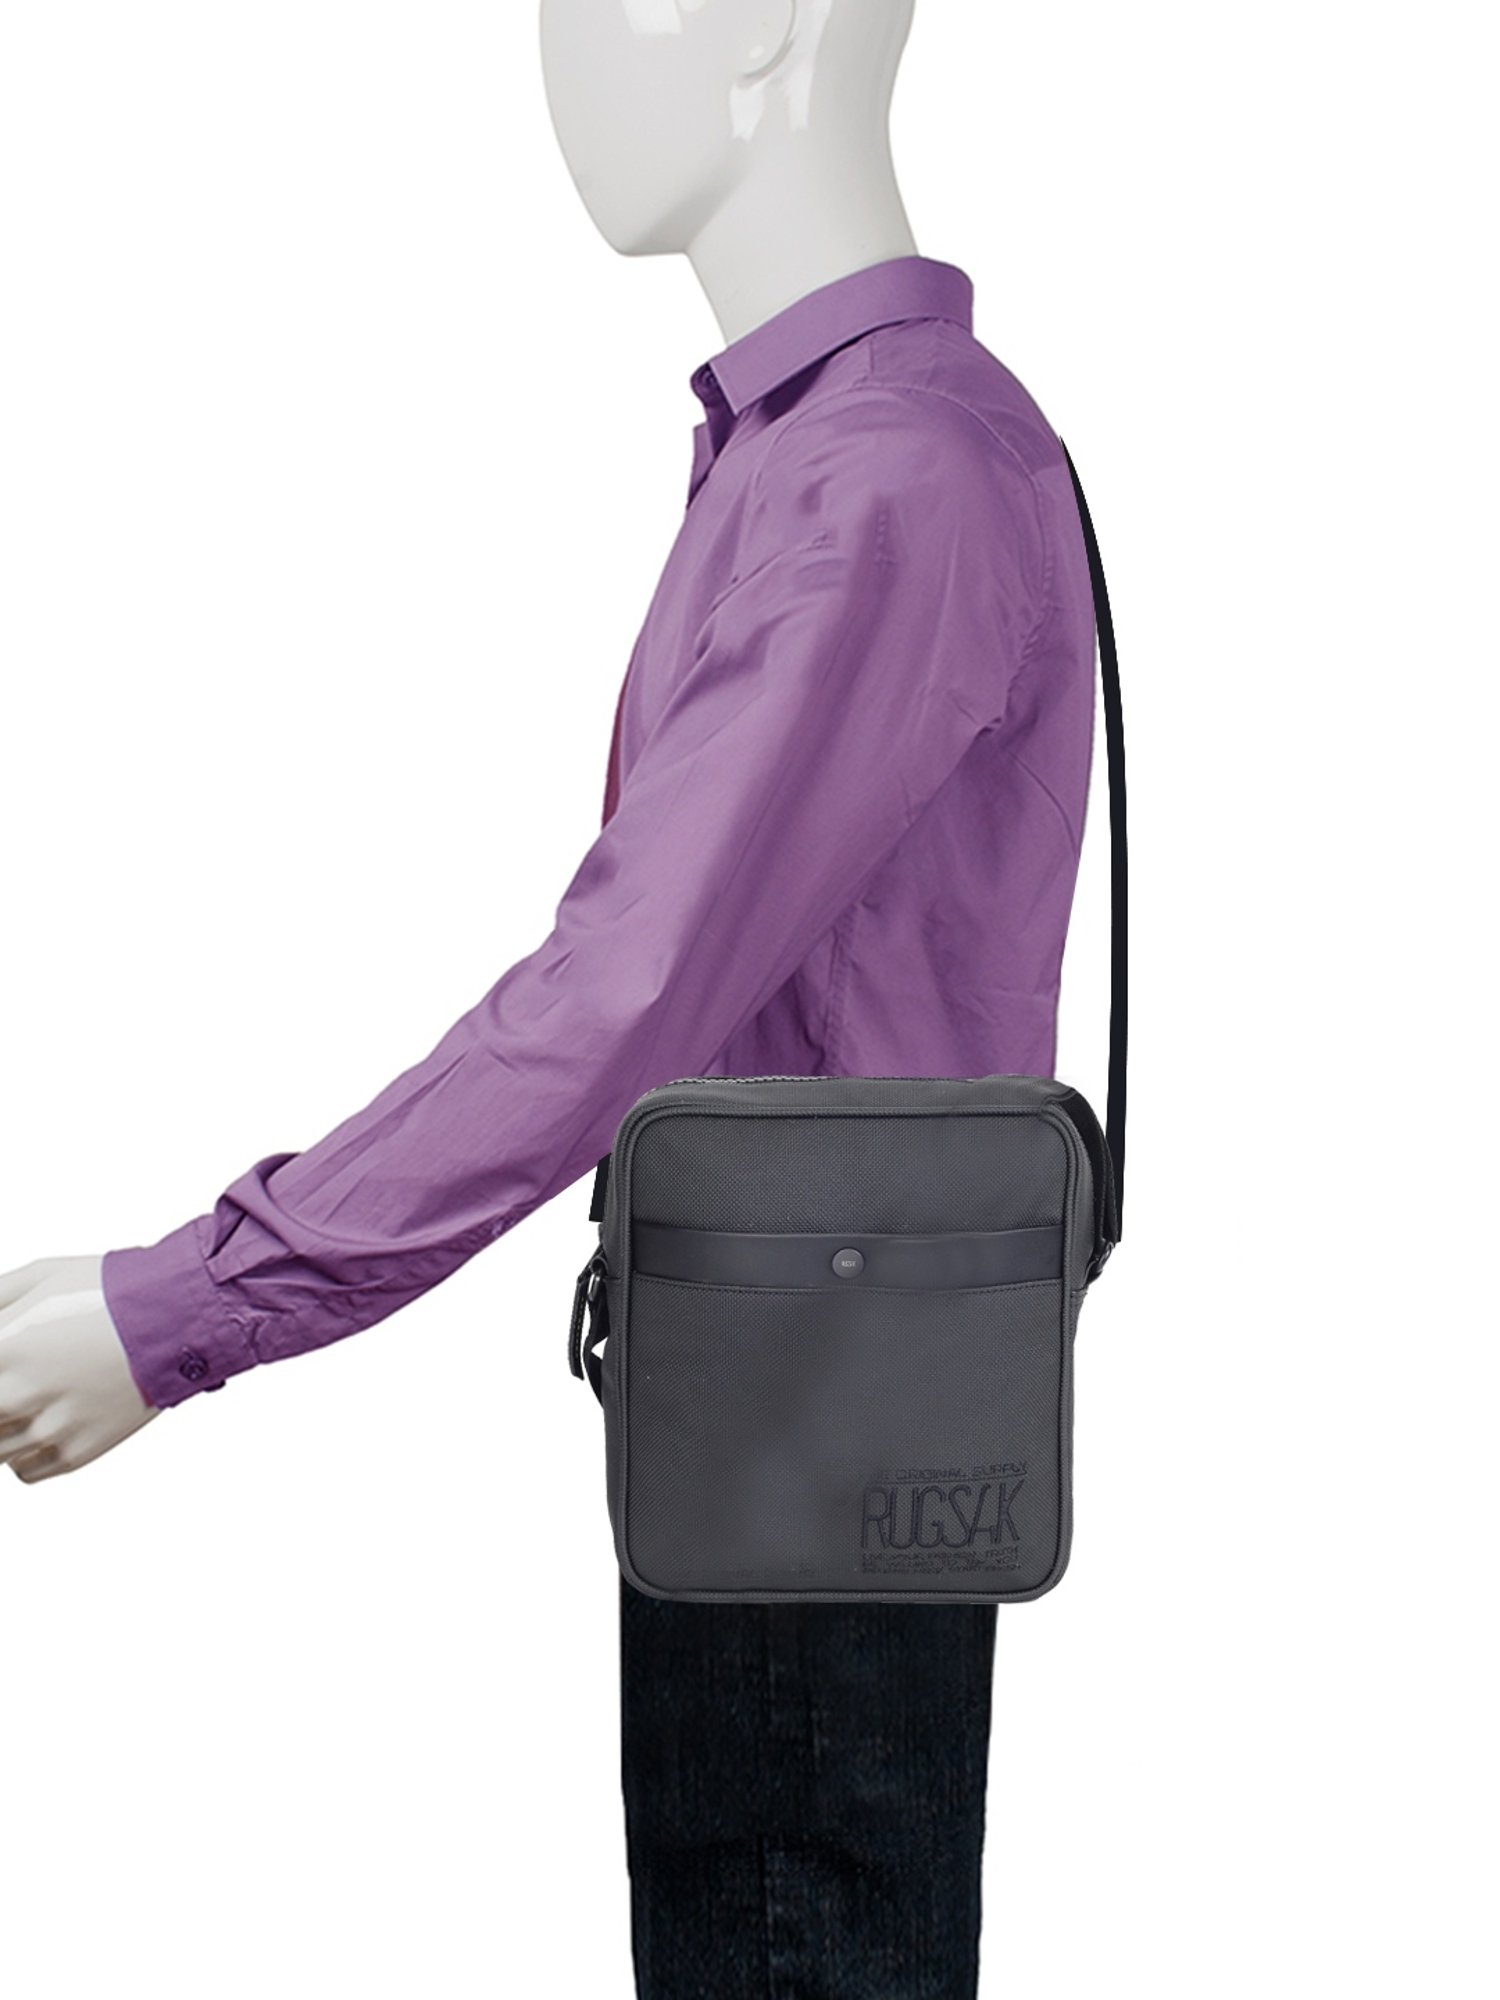 Zenniz Rucksack Bags for Travelling Hiking & Trekking Multi Pockets 90  Litre Elite Extra Large (Black) Online Discounted Price B